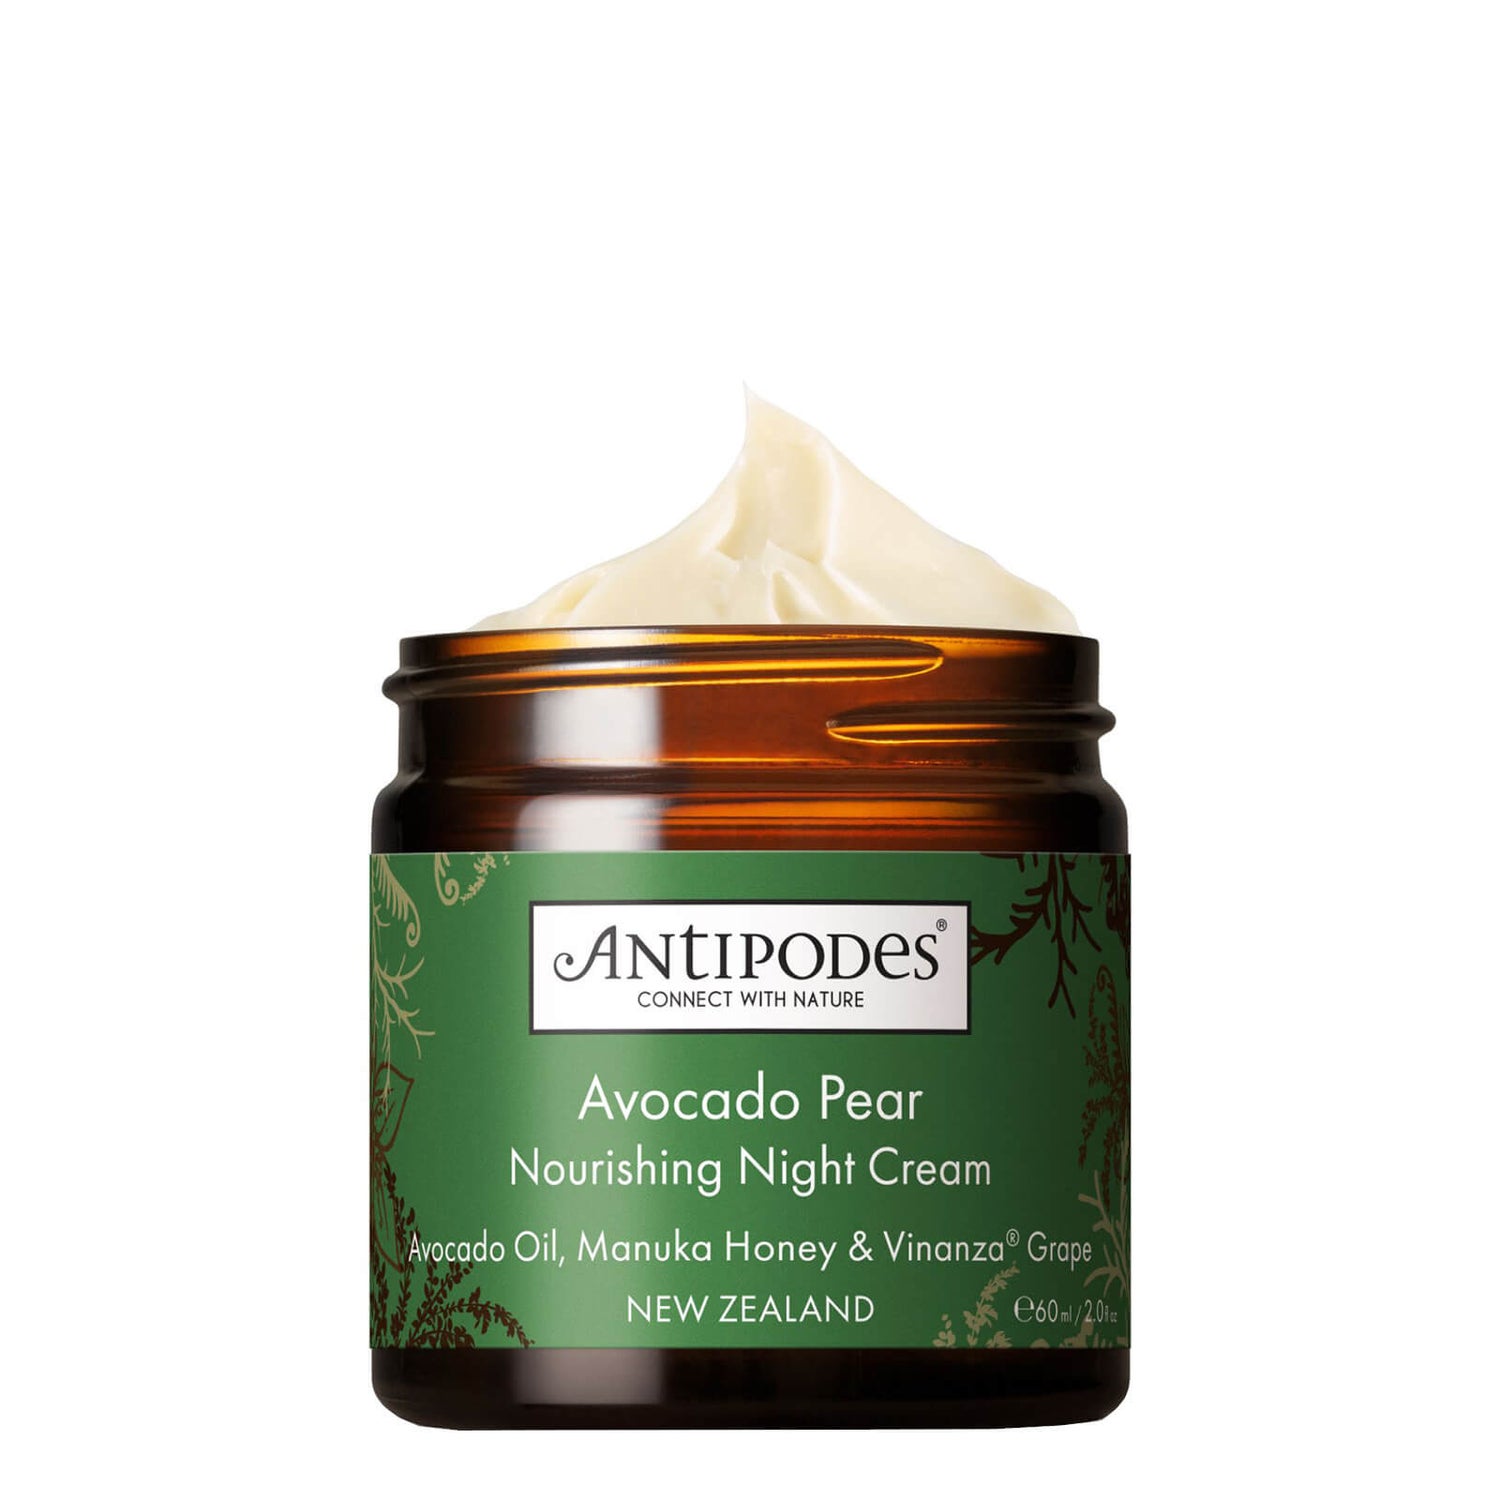 Antipodes Avocado Pear Nourishing Night Cream (60g)